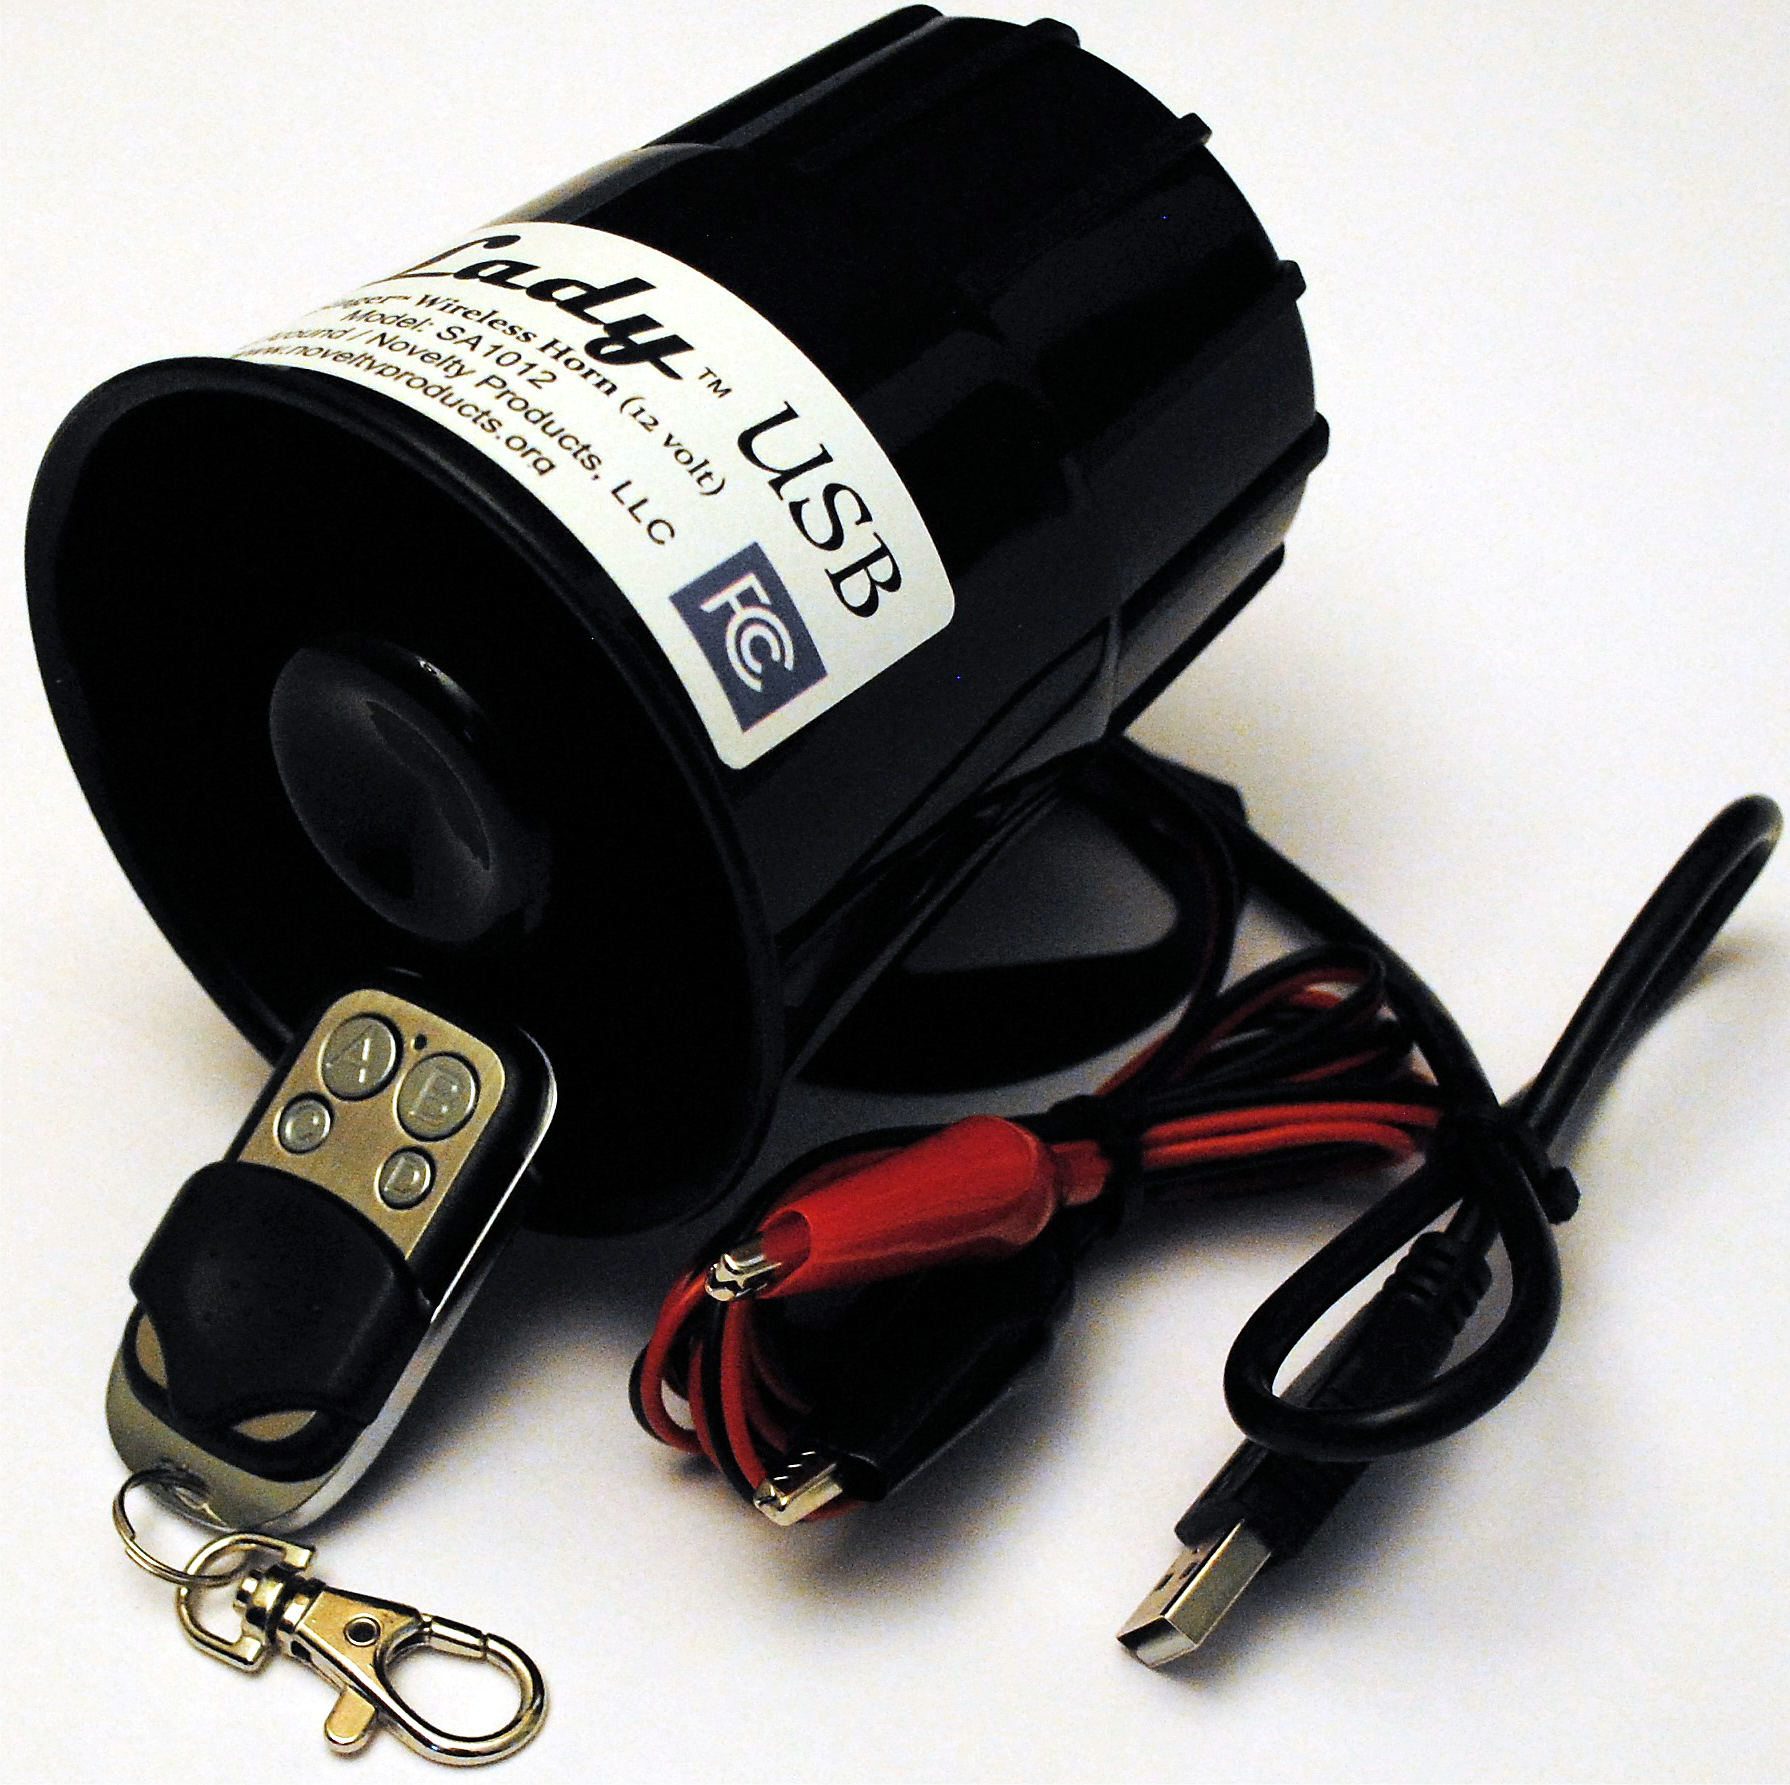 Washington State University Cougars USB Car Horn with Wireless KeyFOB Remote